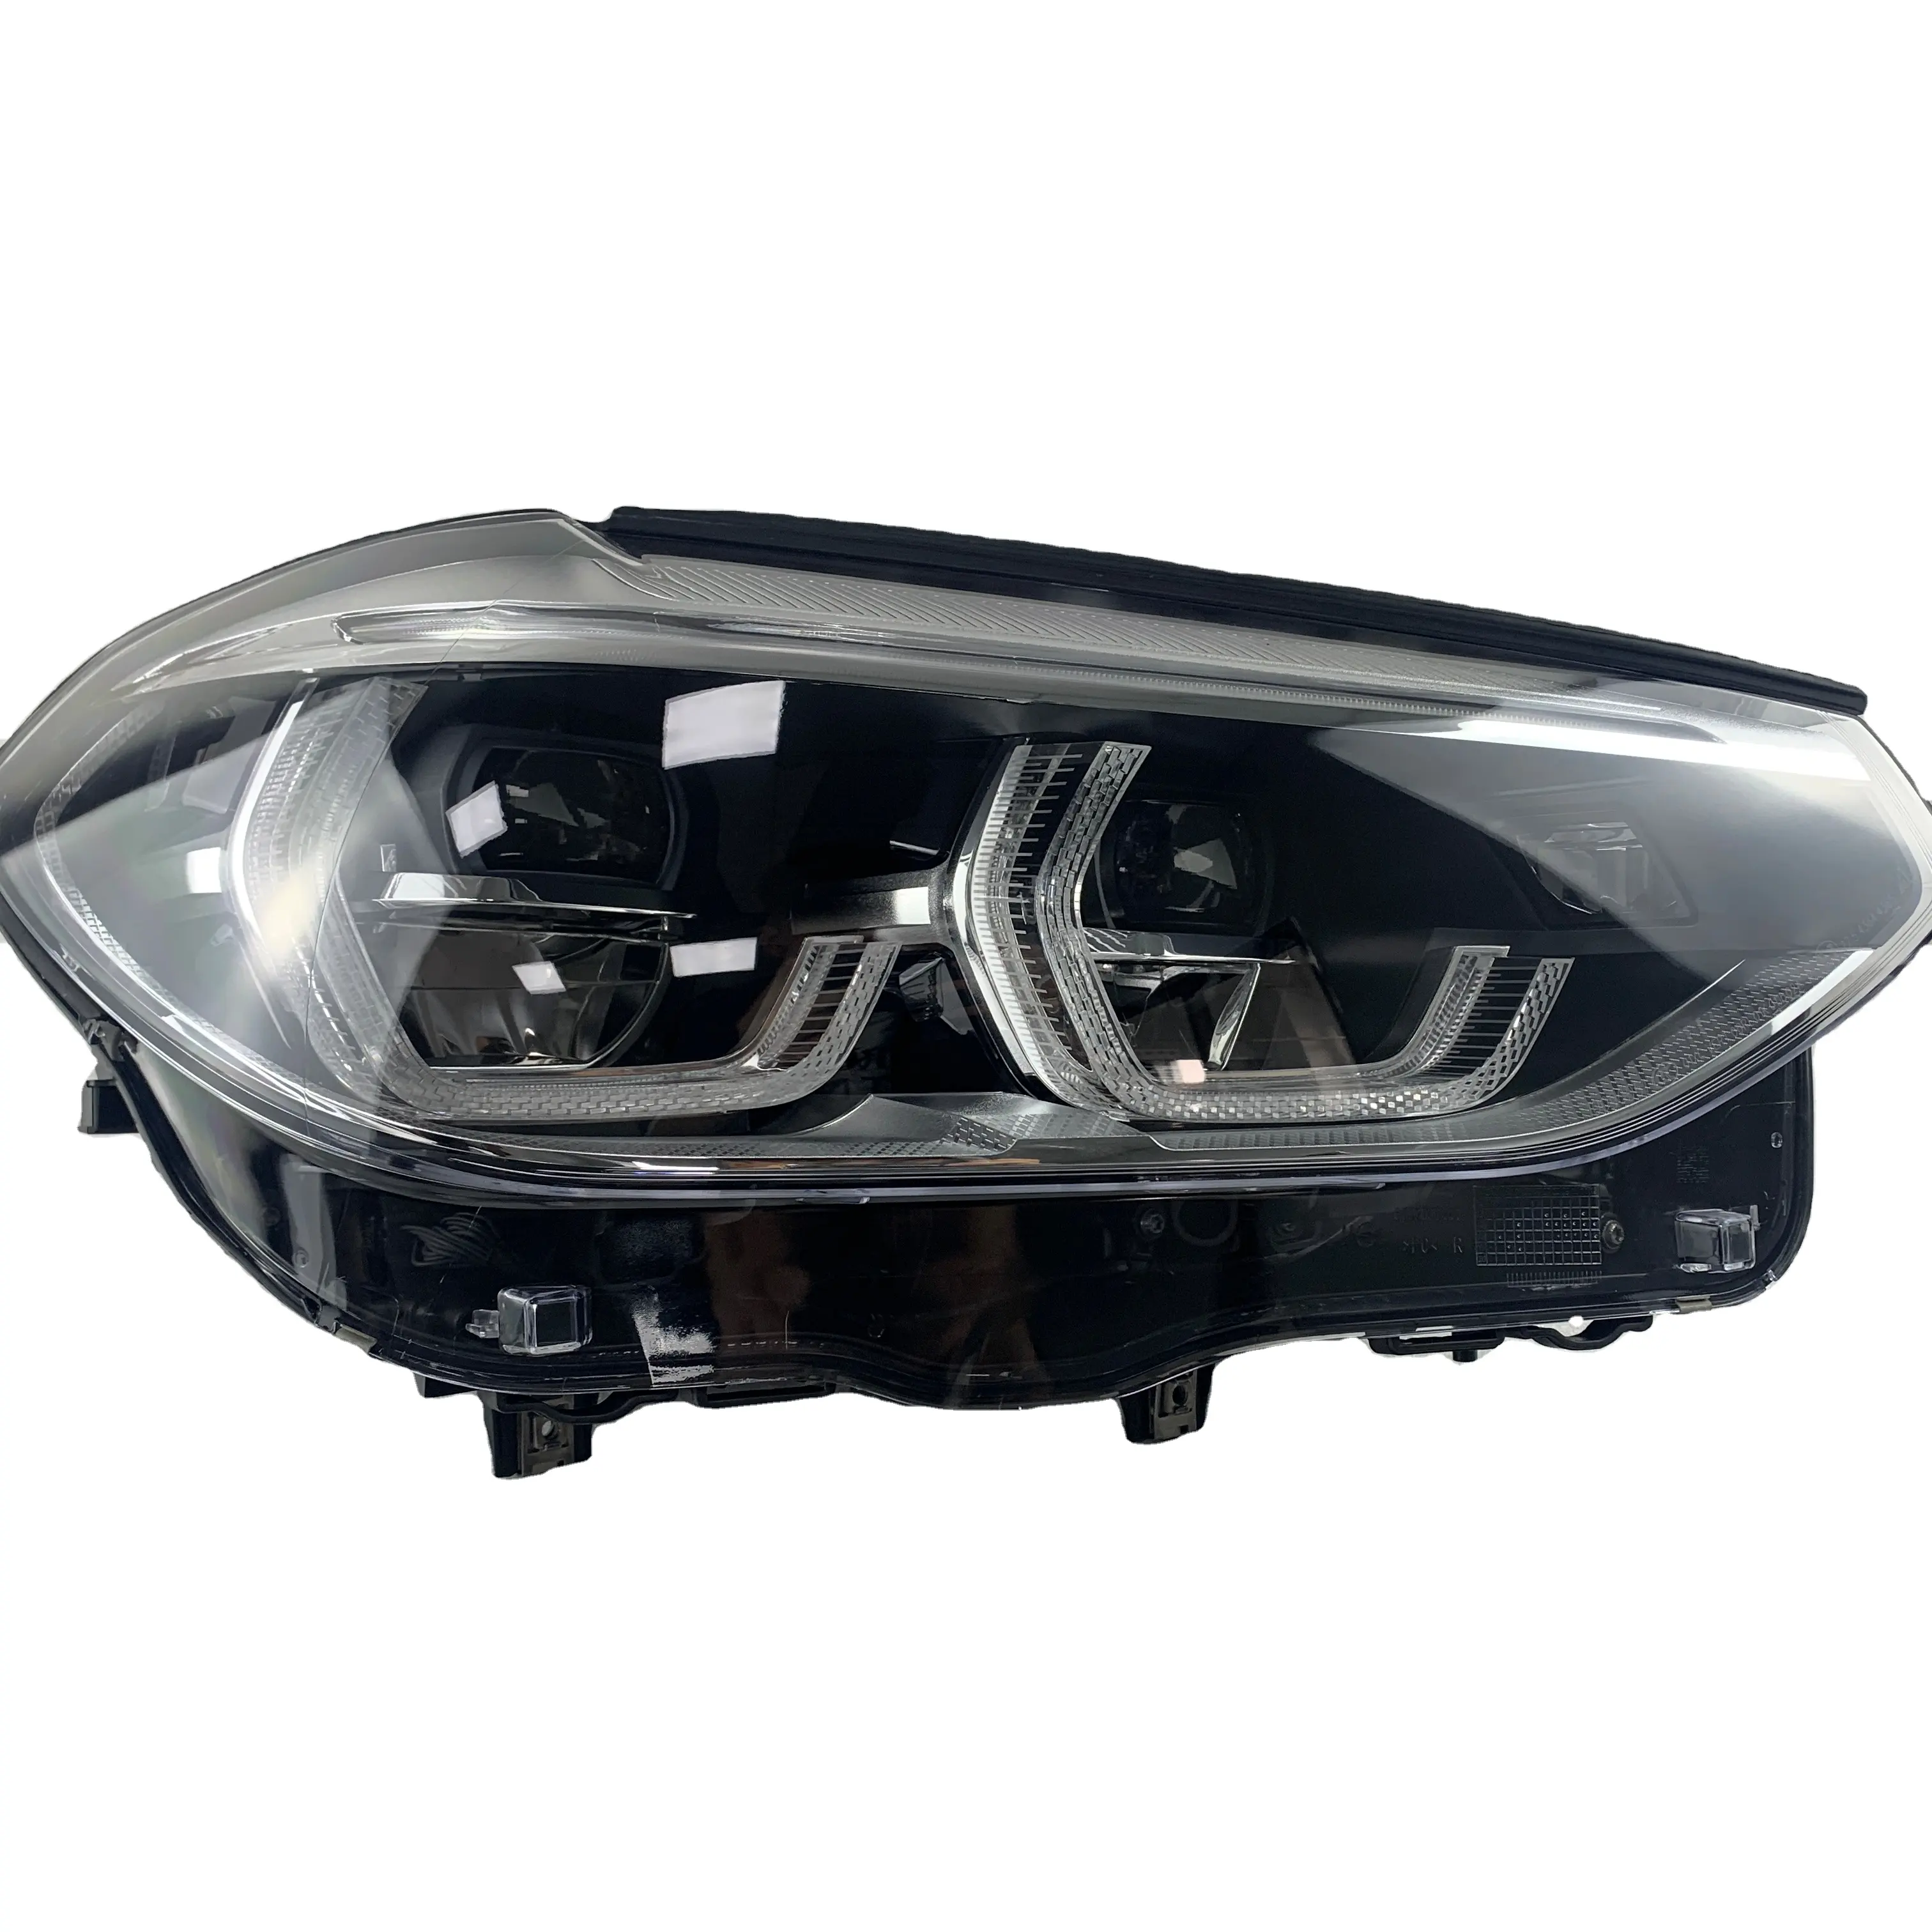 2016-2018 for BMW x3g01 LED Headlight Automotive Headlight Accessories Original